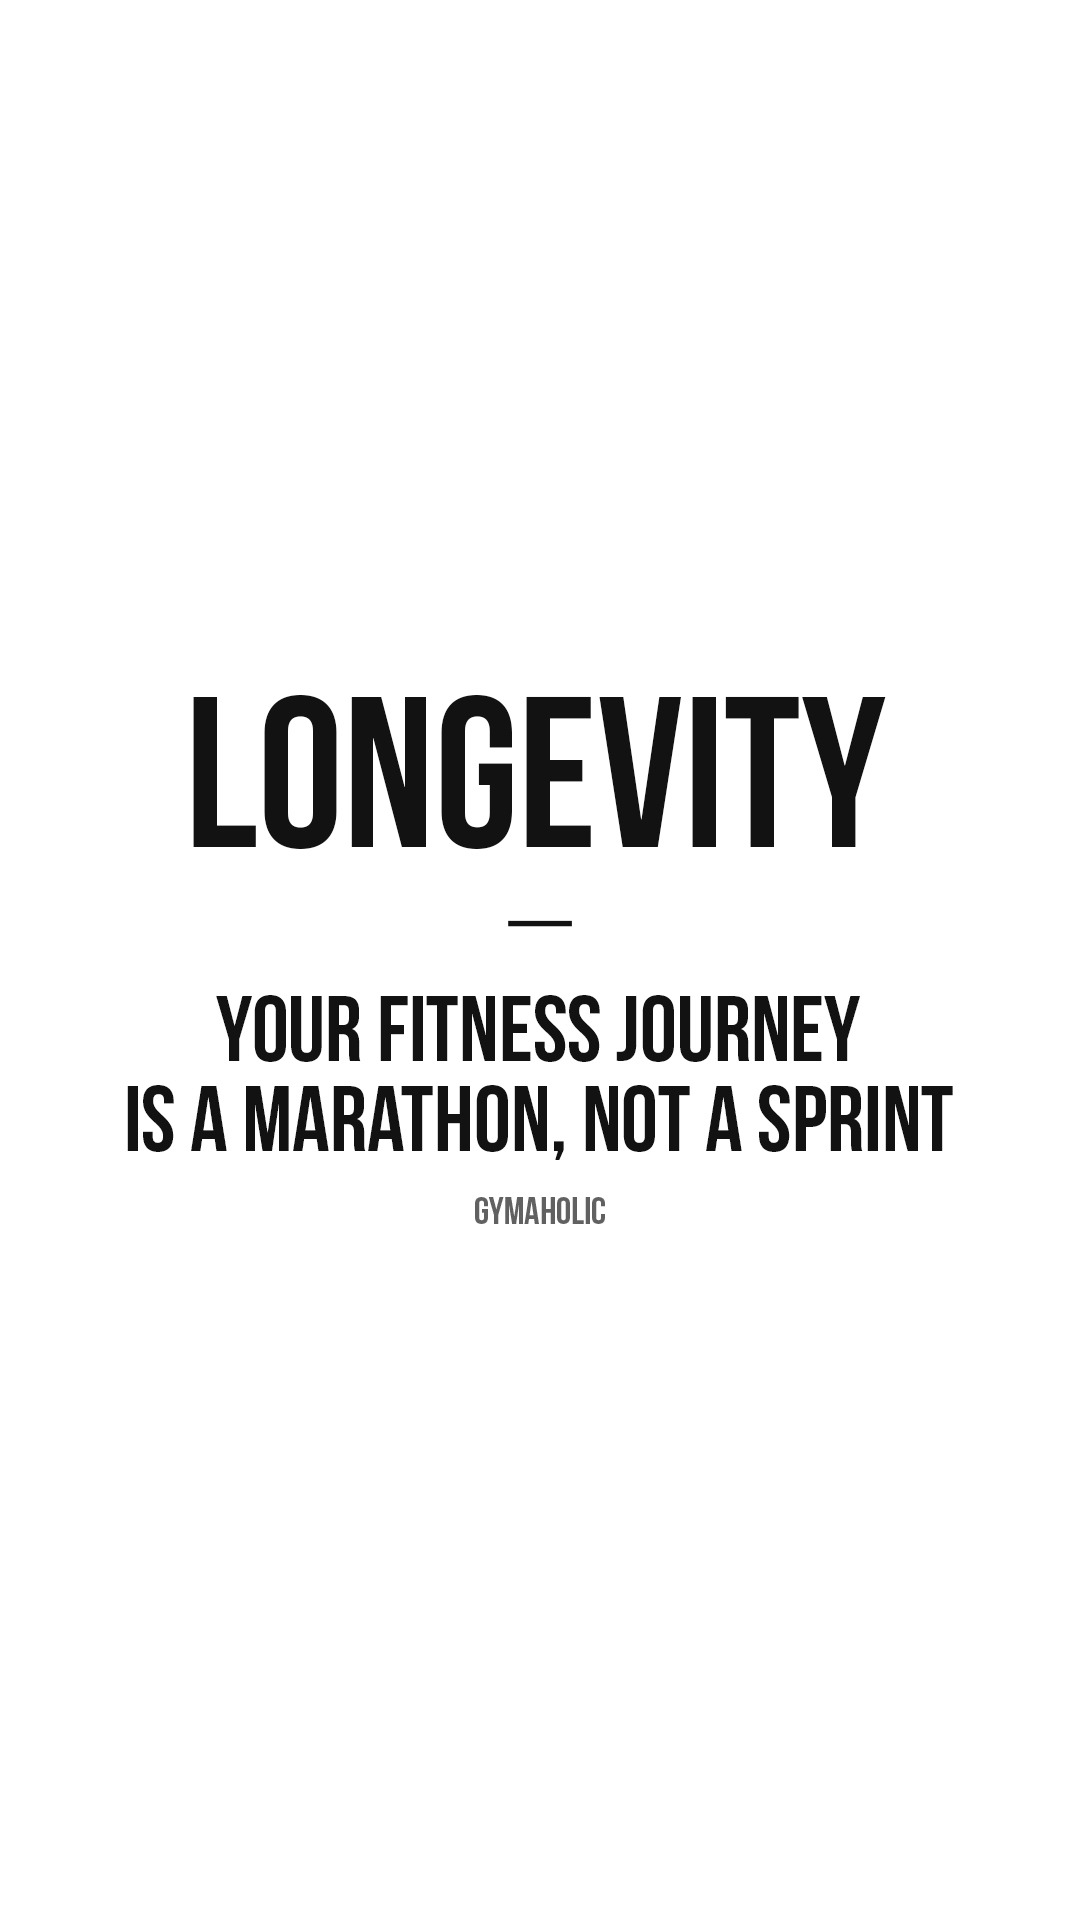 Longevity: your fitness journey is a marathon, not a sprint